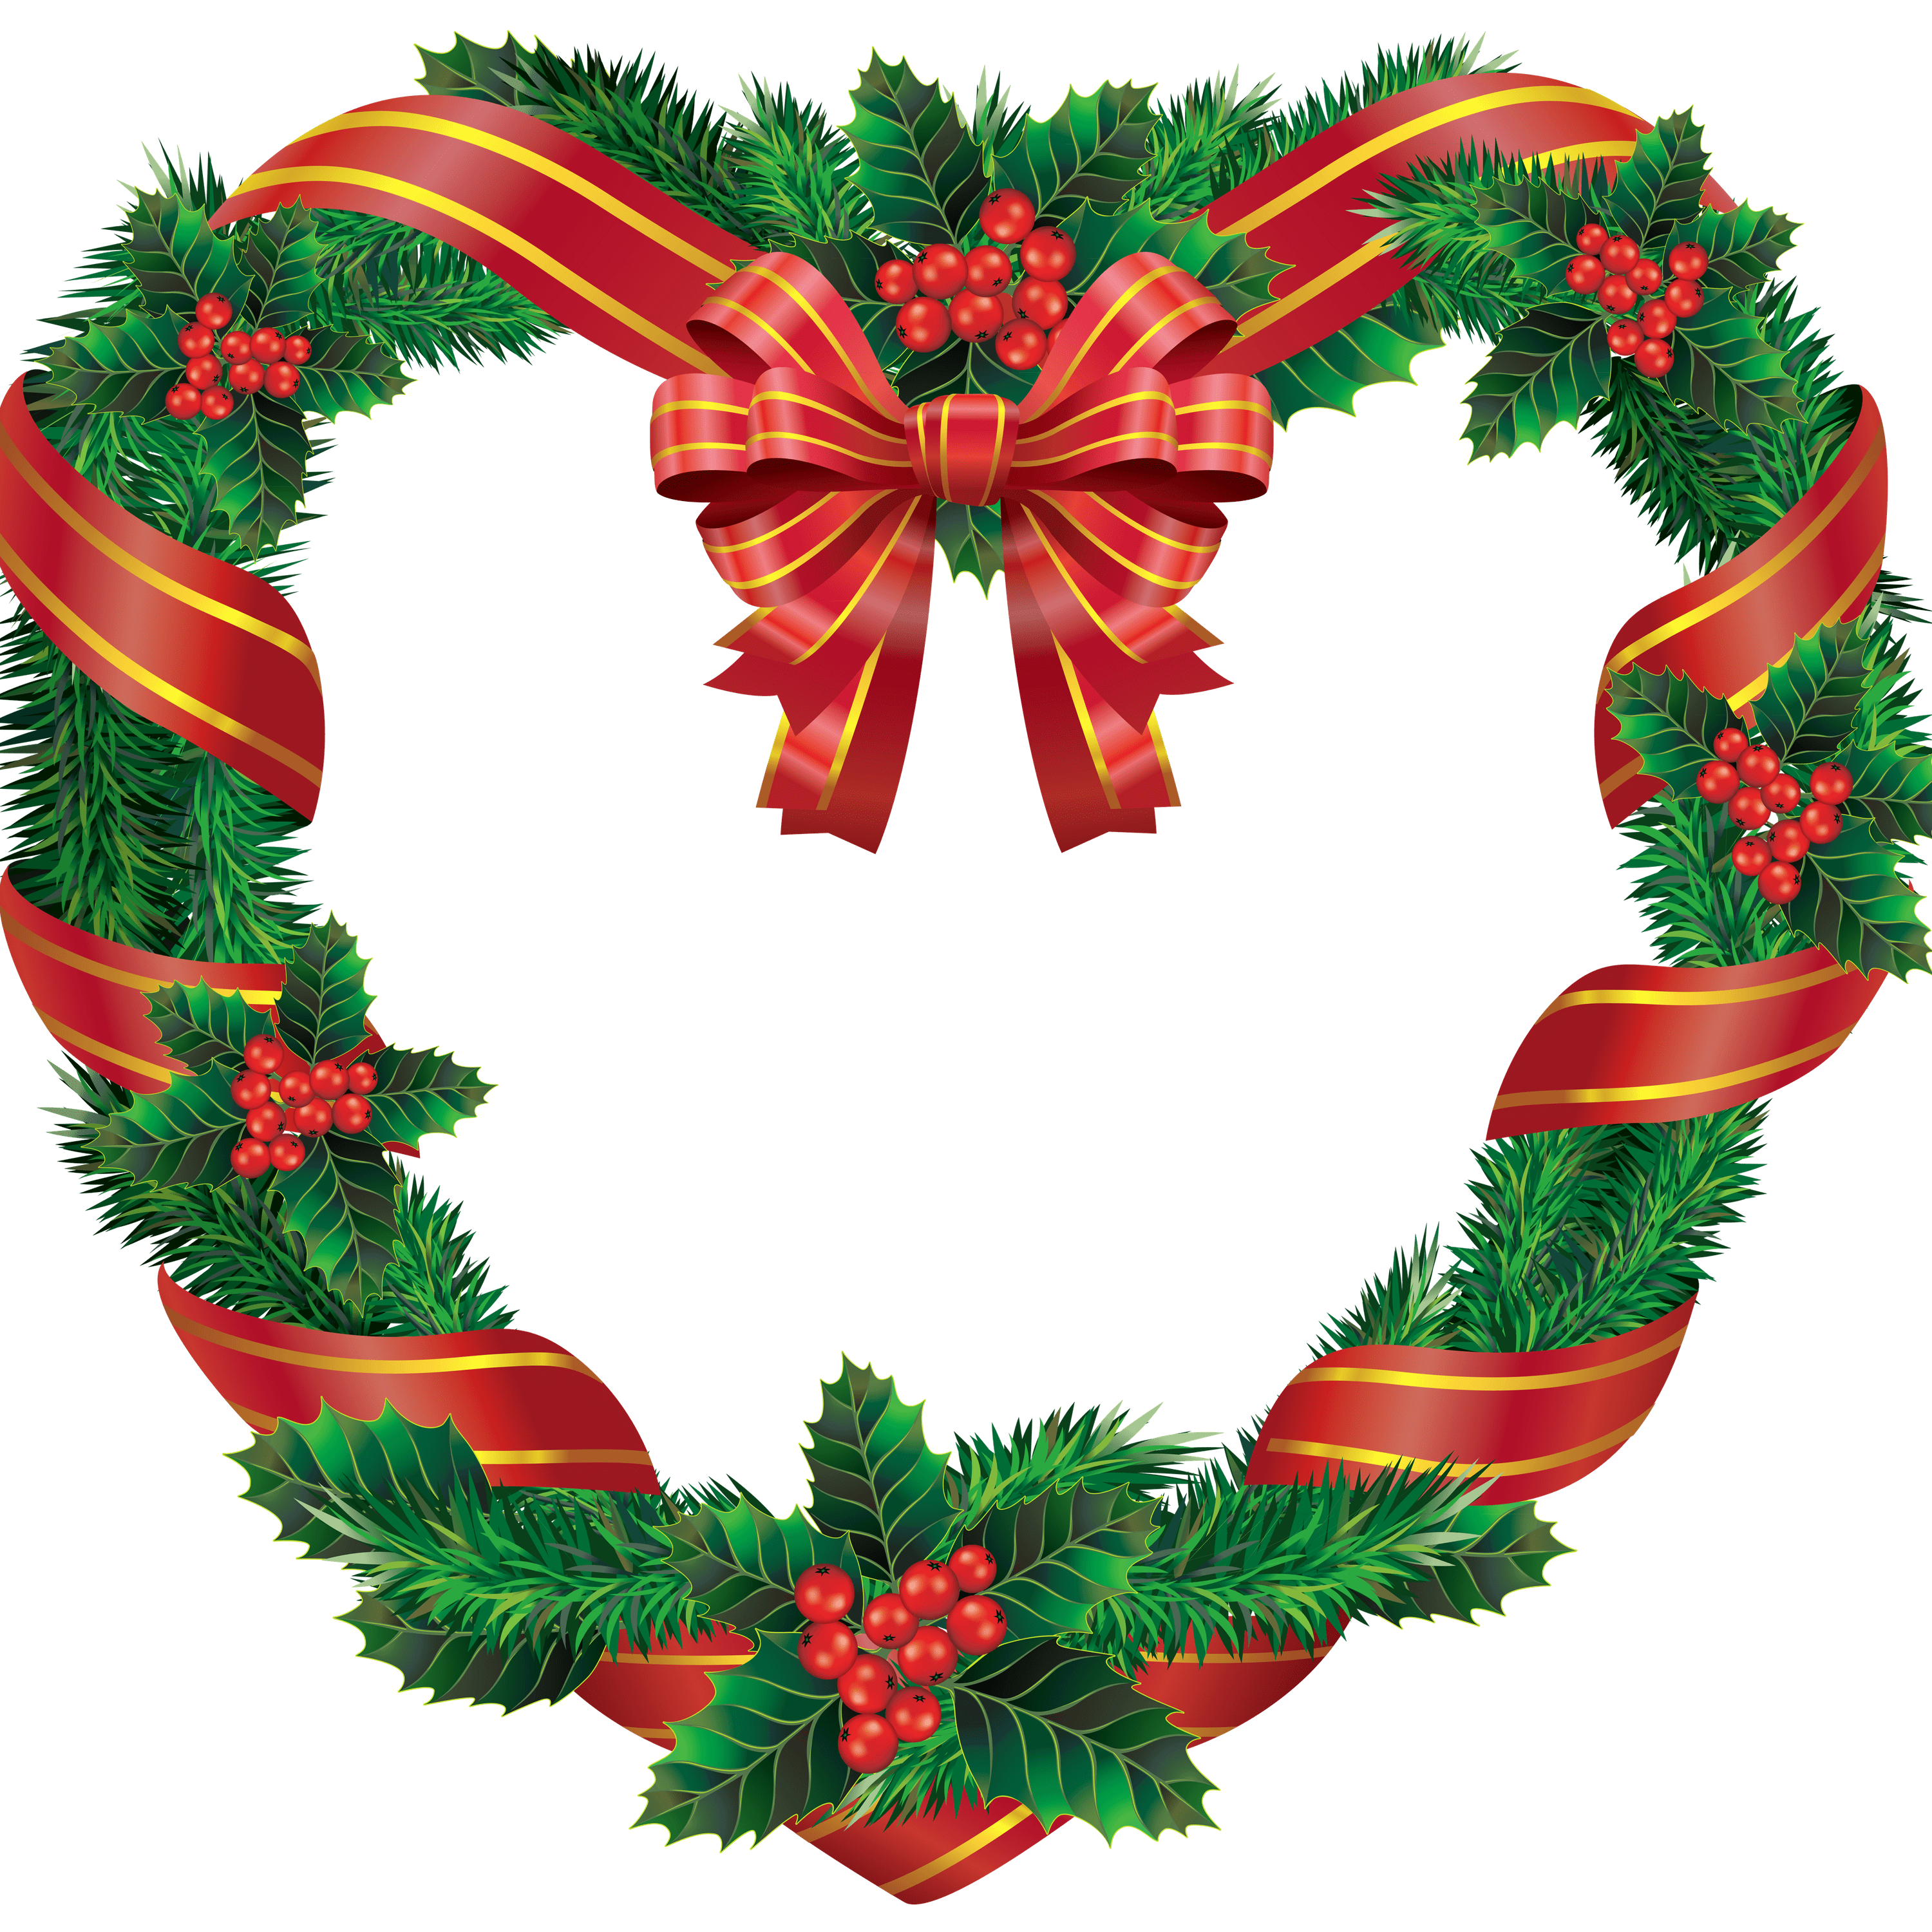 Heart Christmas Wreath transparent PNG.